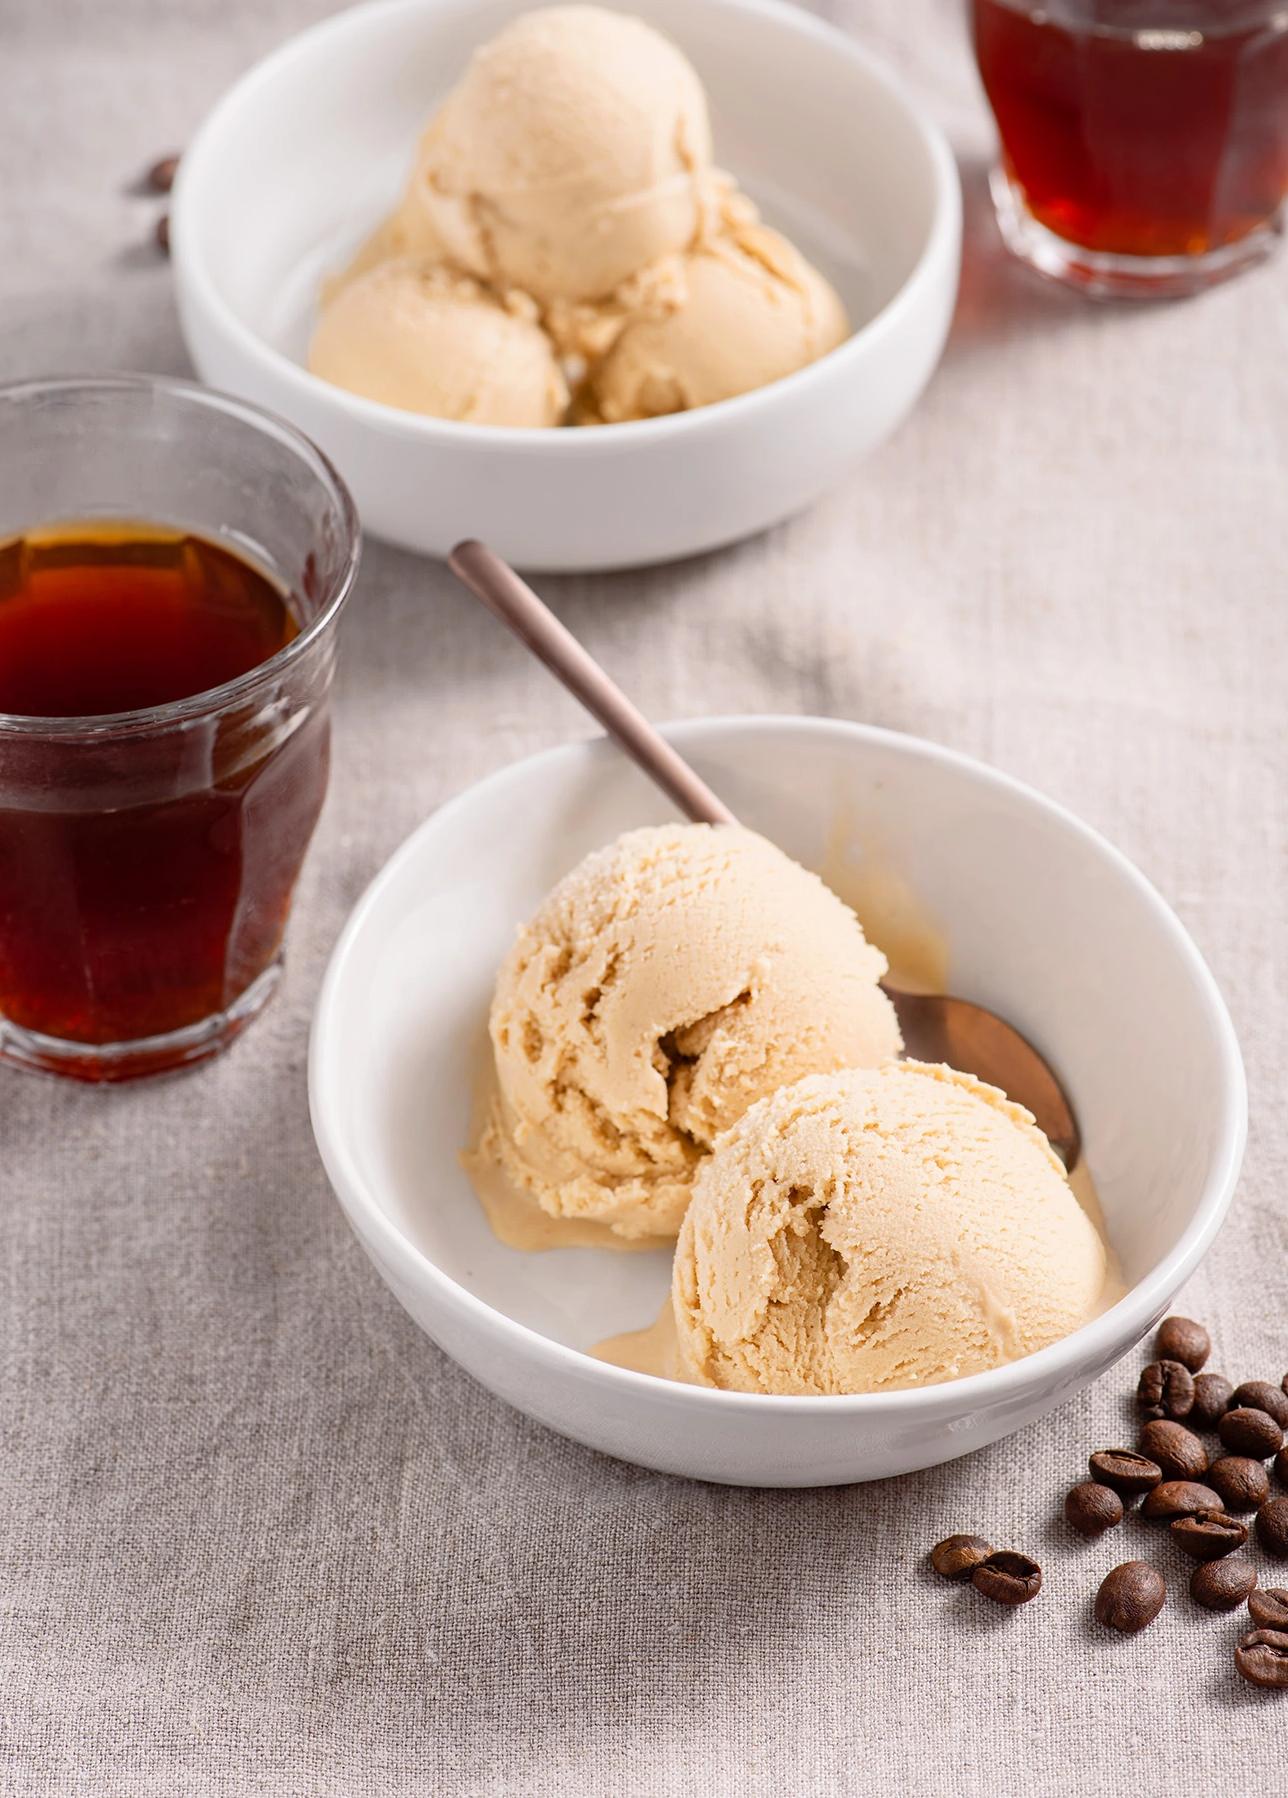  Brimming with espresso flavor, this gelato is a coffee lover's dream come true.